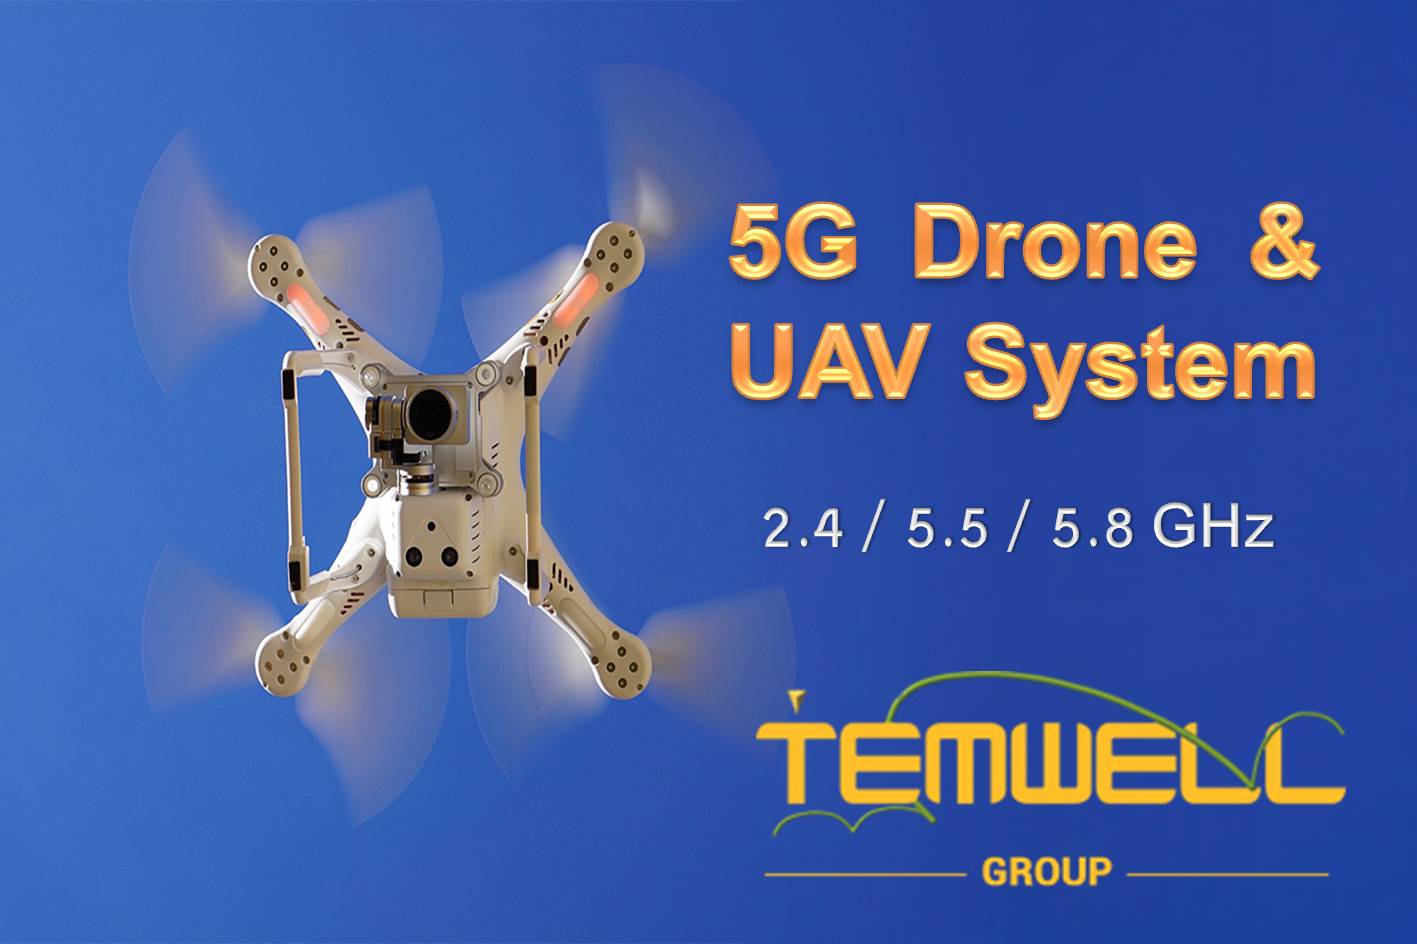 proimages/featured/drone-uav-system/drone-uav-system3.jpg